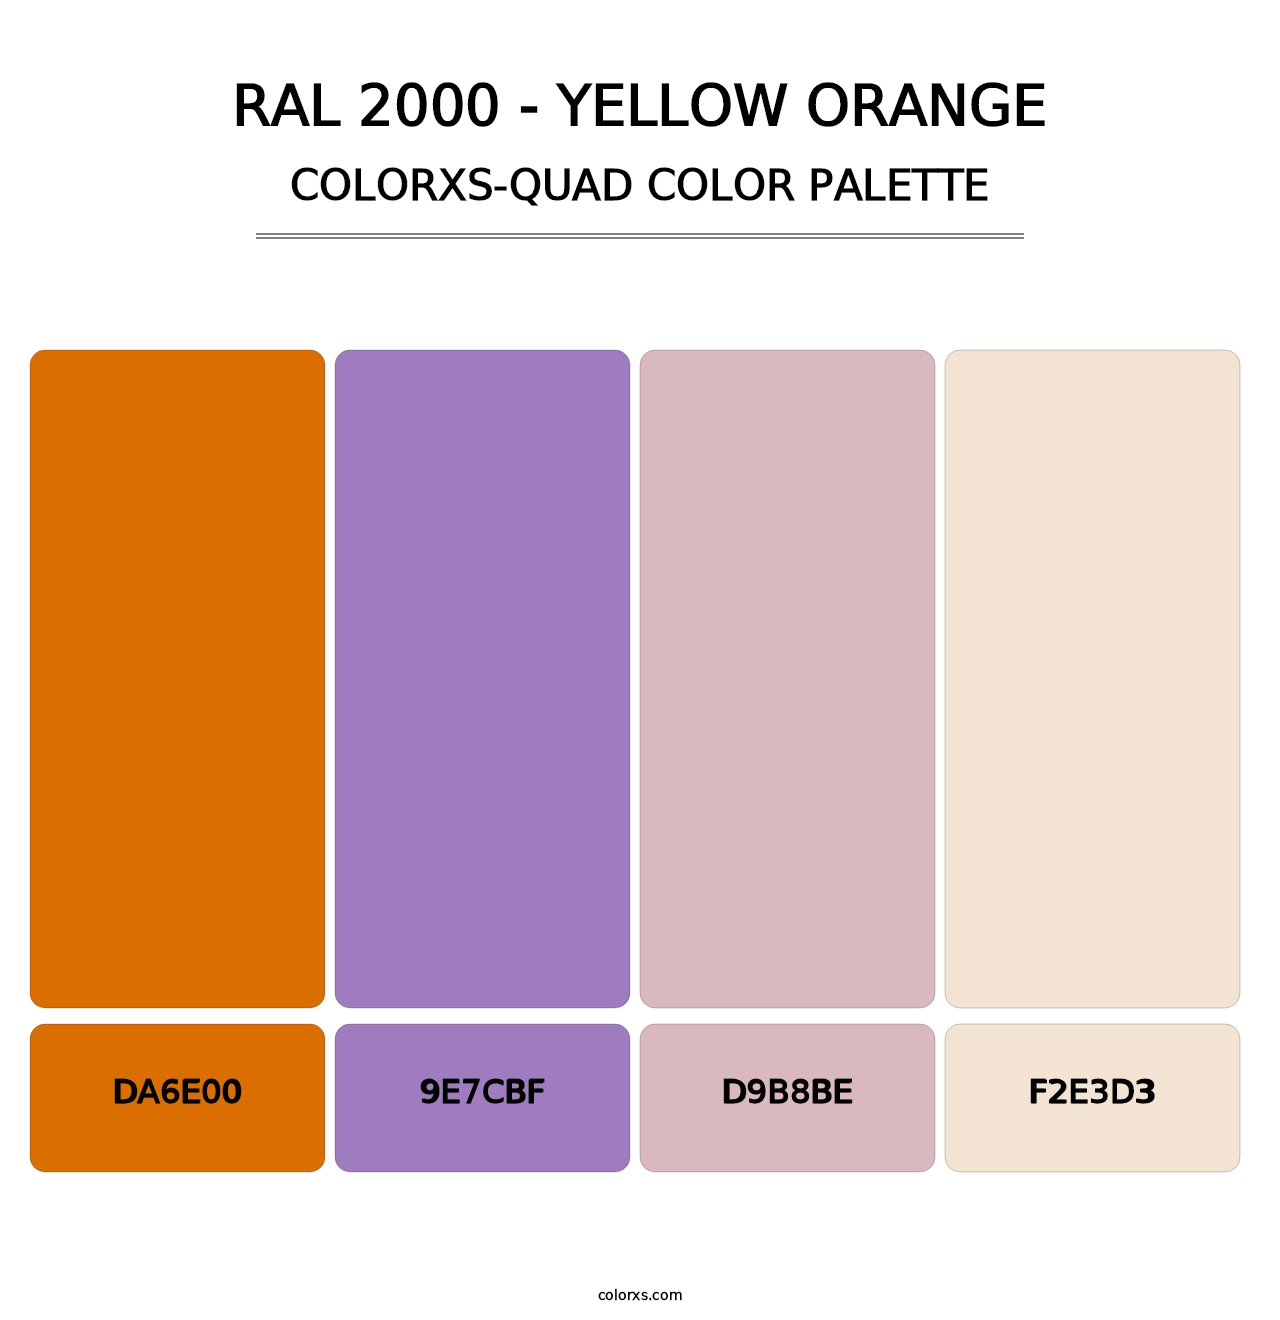 RAL 2000 - Yellow Orange - Colorxs Quad Palette